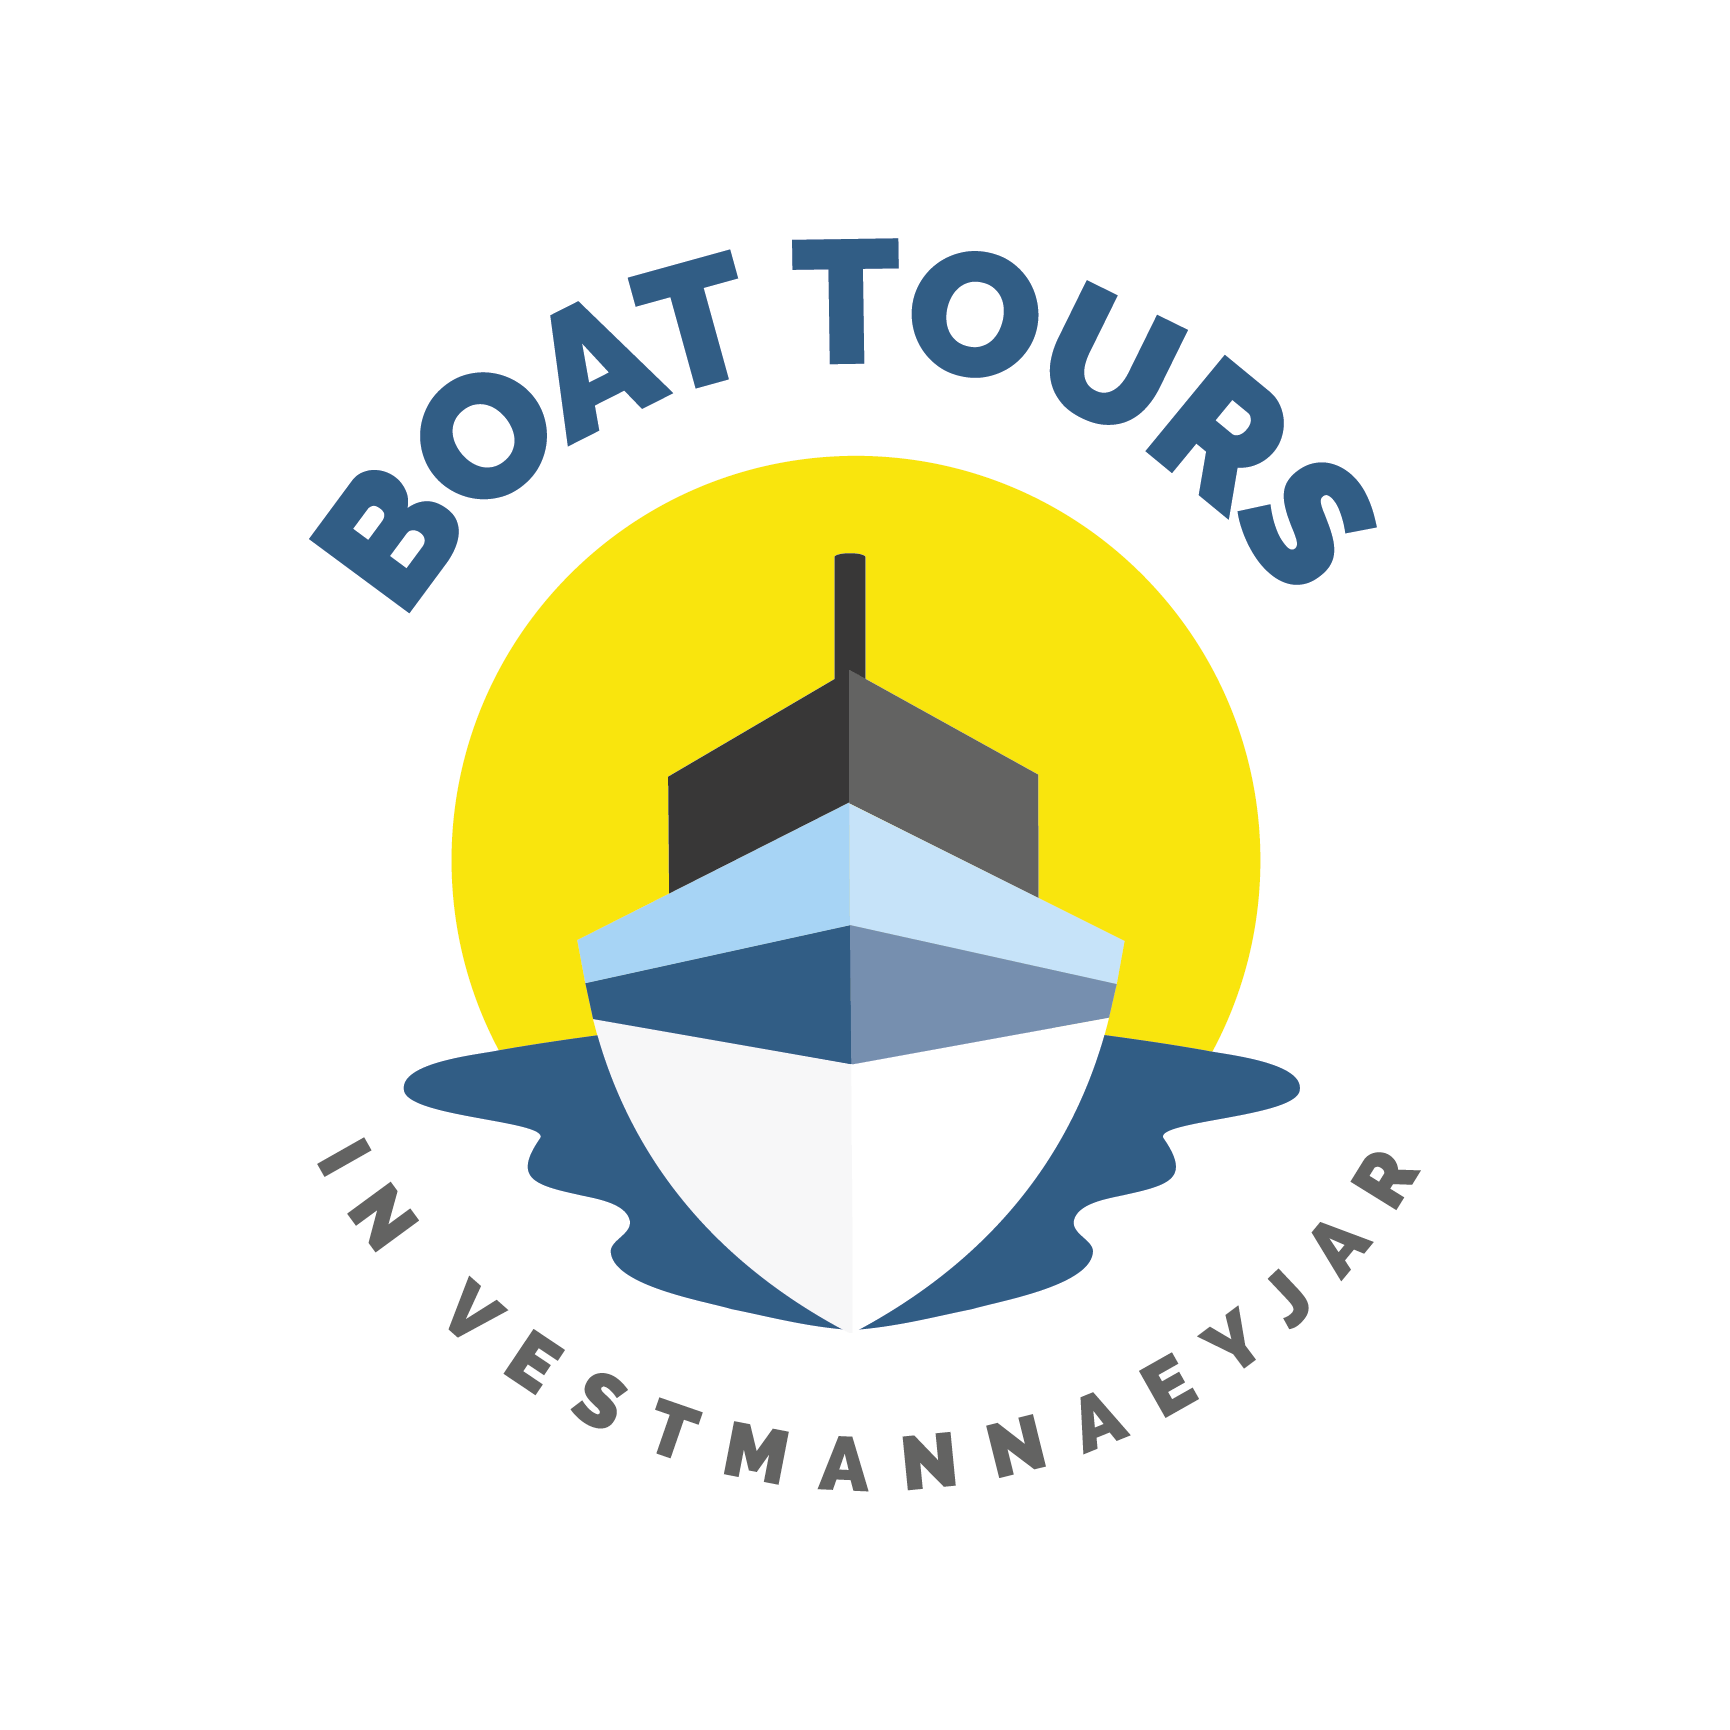 Boat-tours-logo@2x.png